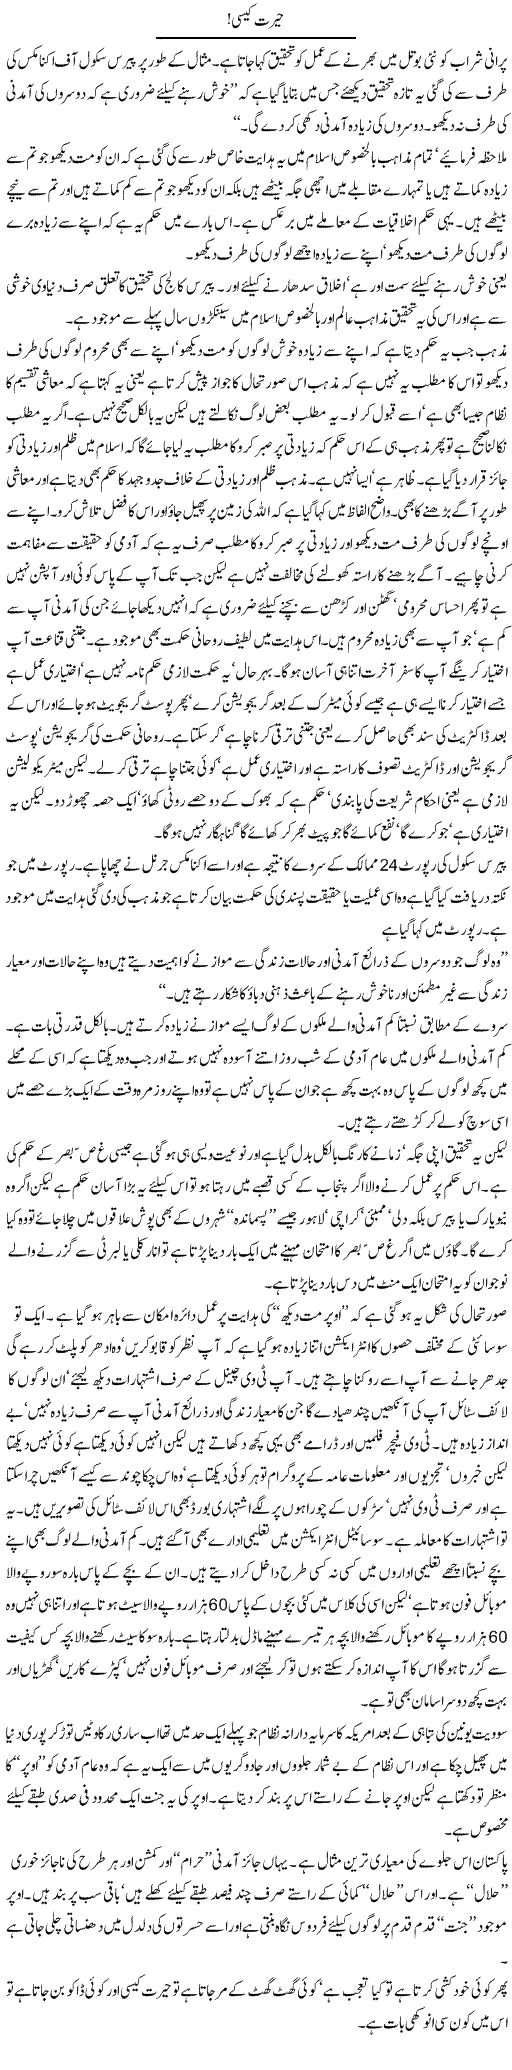 Harat Kasi? Express Column Abdullah Tariq 1 June 2010